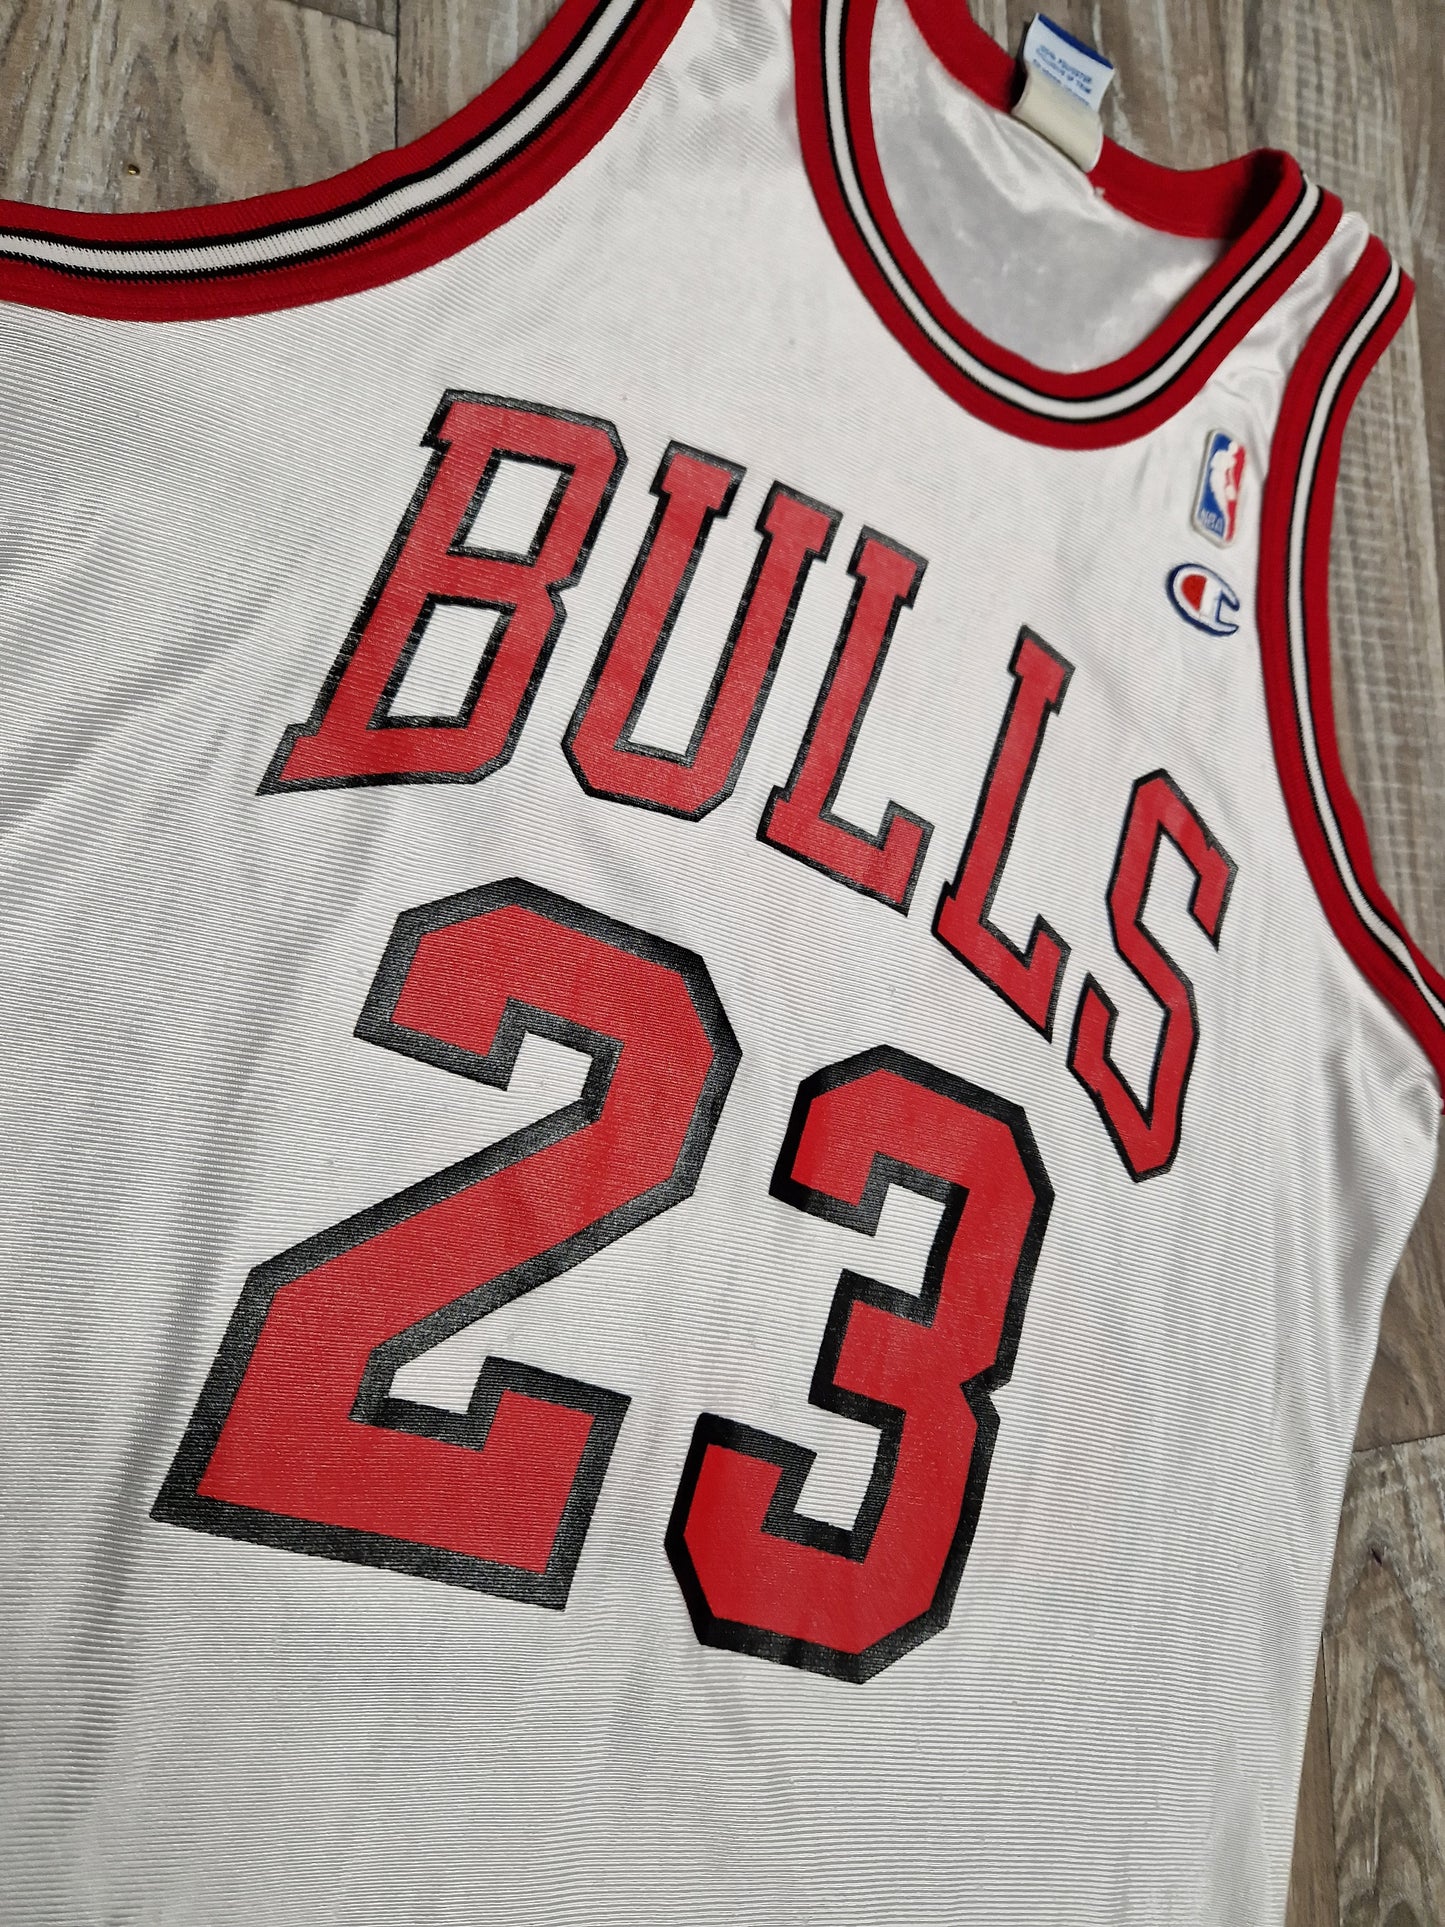 Michael Jordan Chicago Bulls Jersey Size Medium